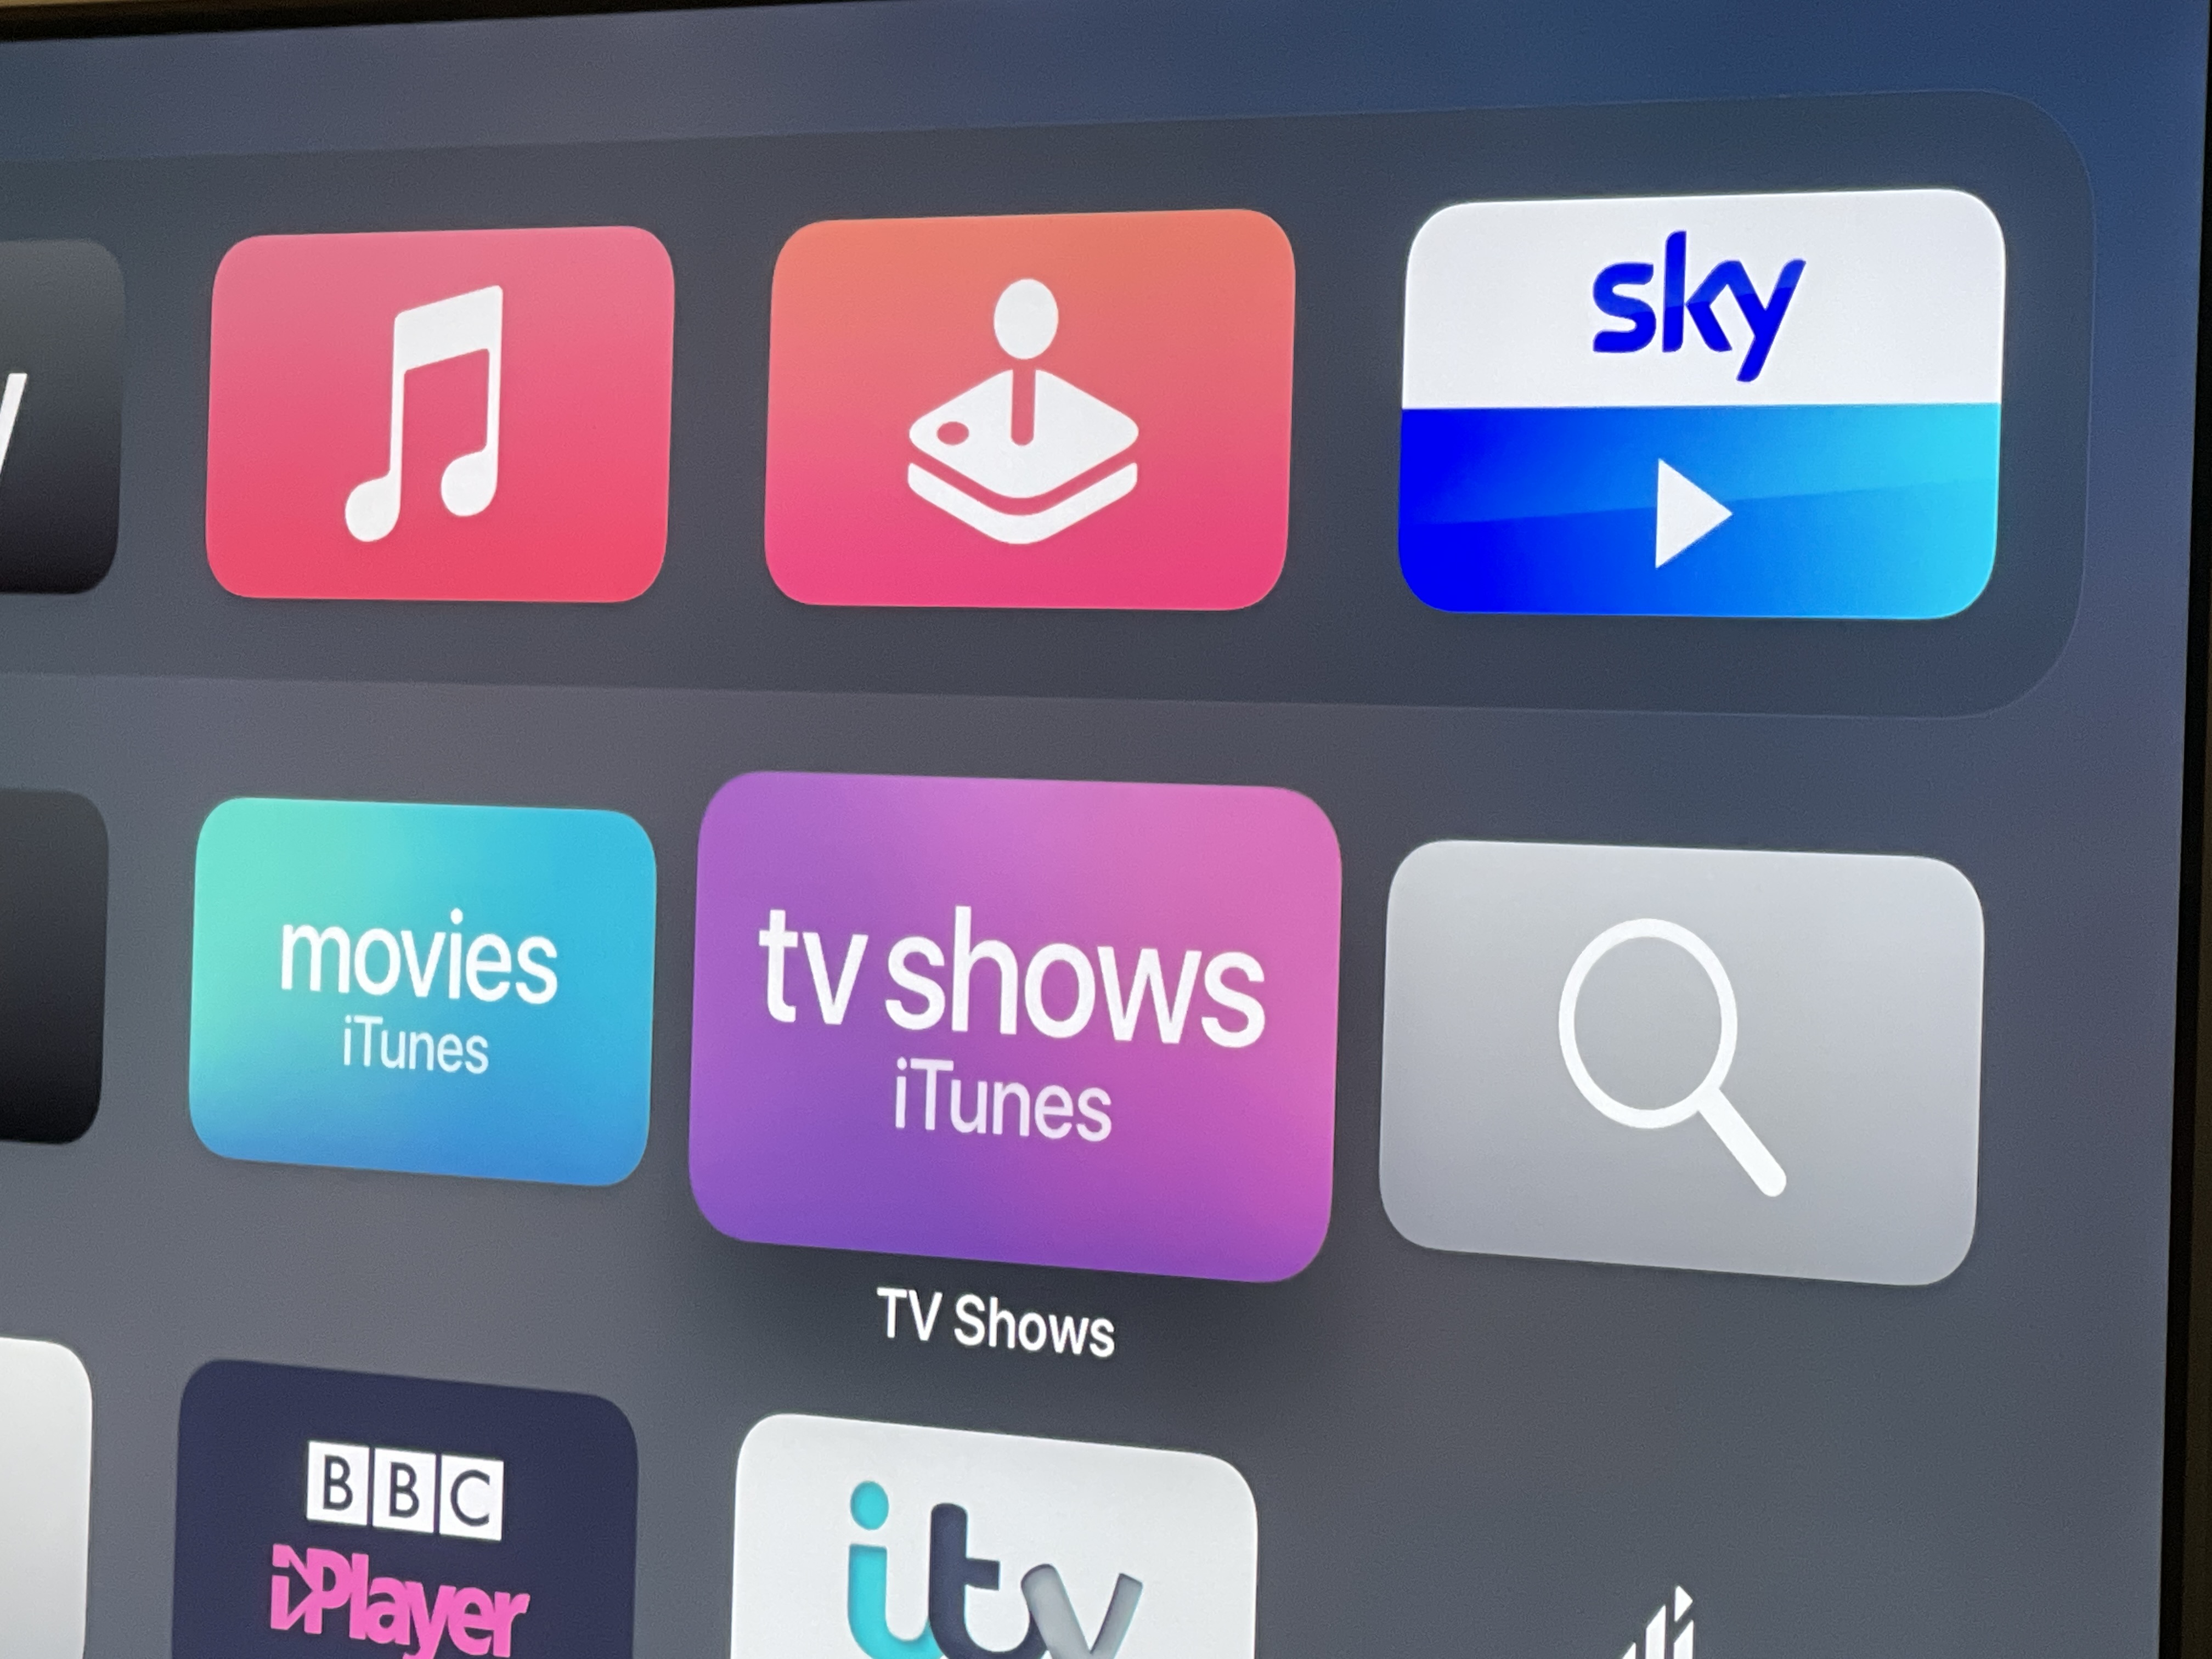 At bygge klynke Derivation Answered: Sky go on Apple tv | Sky Community